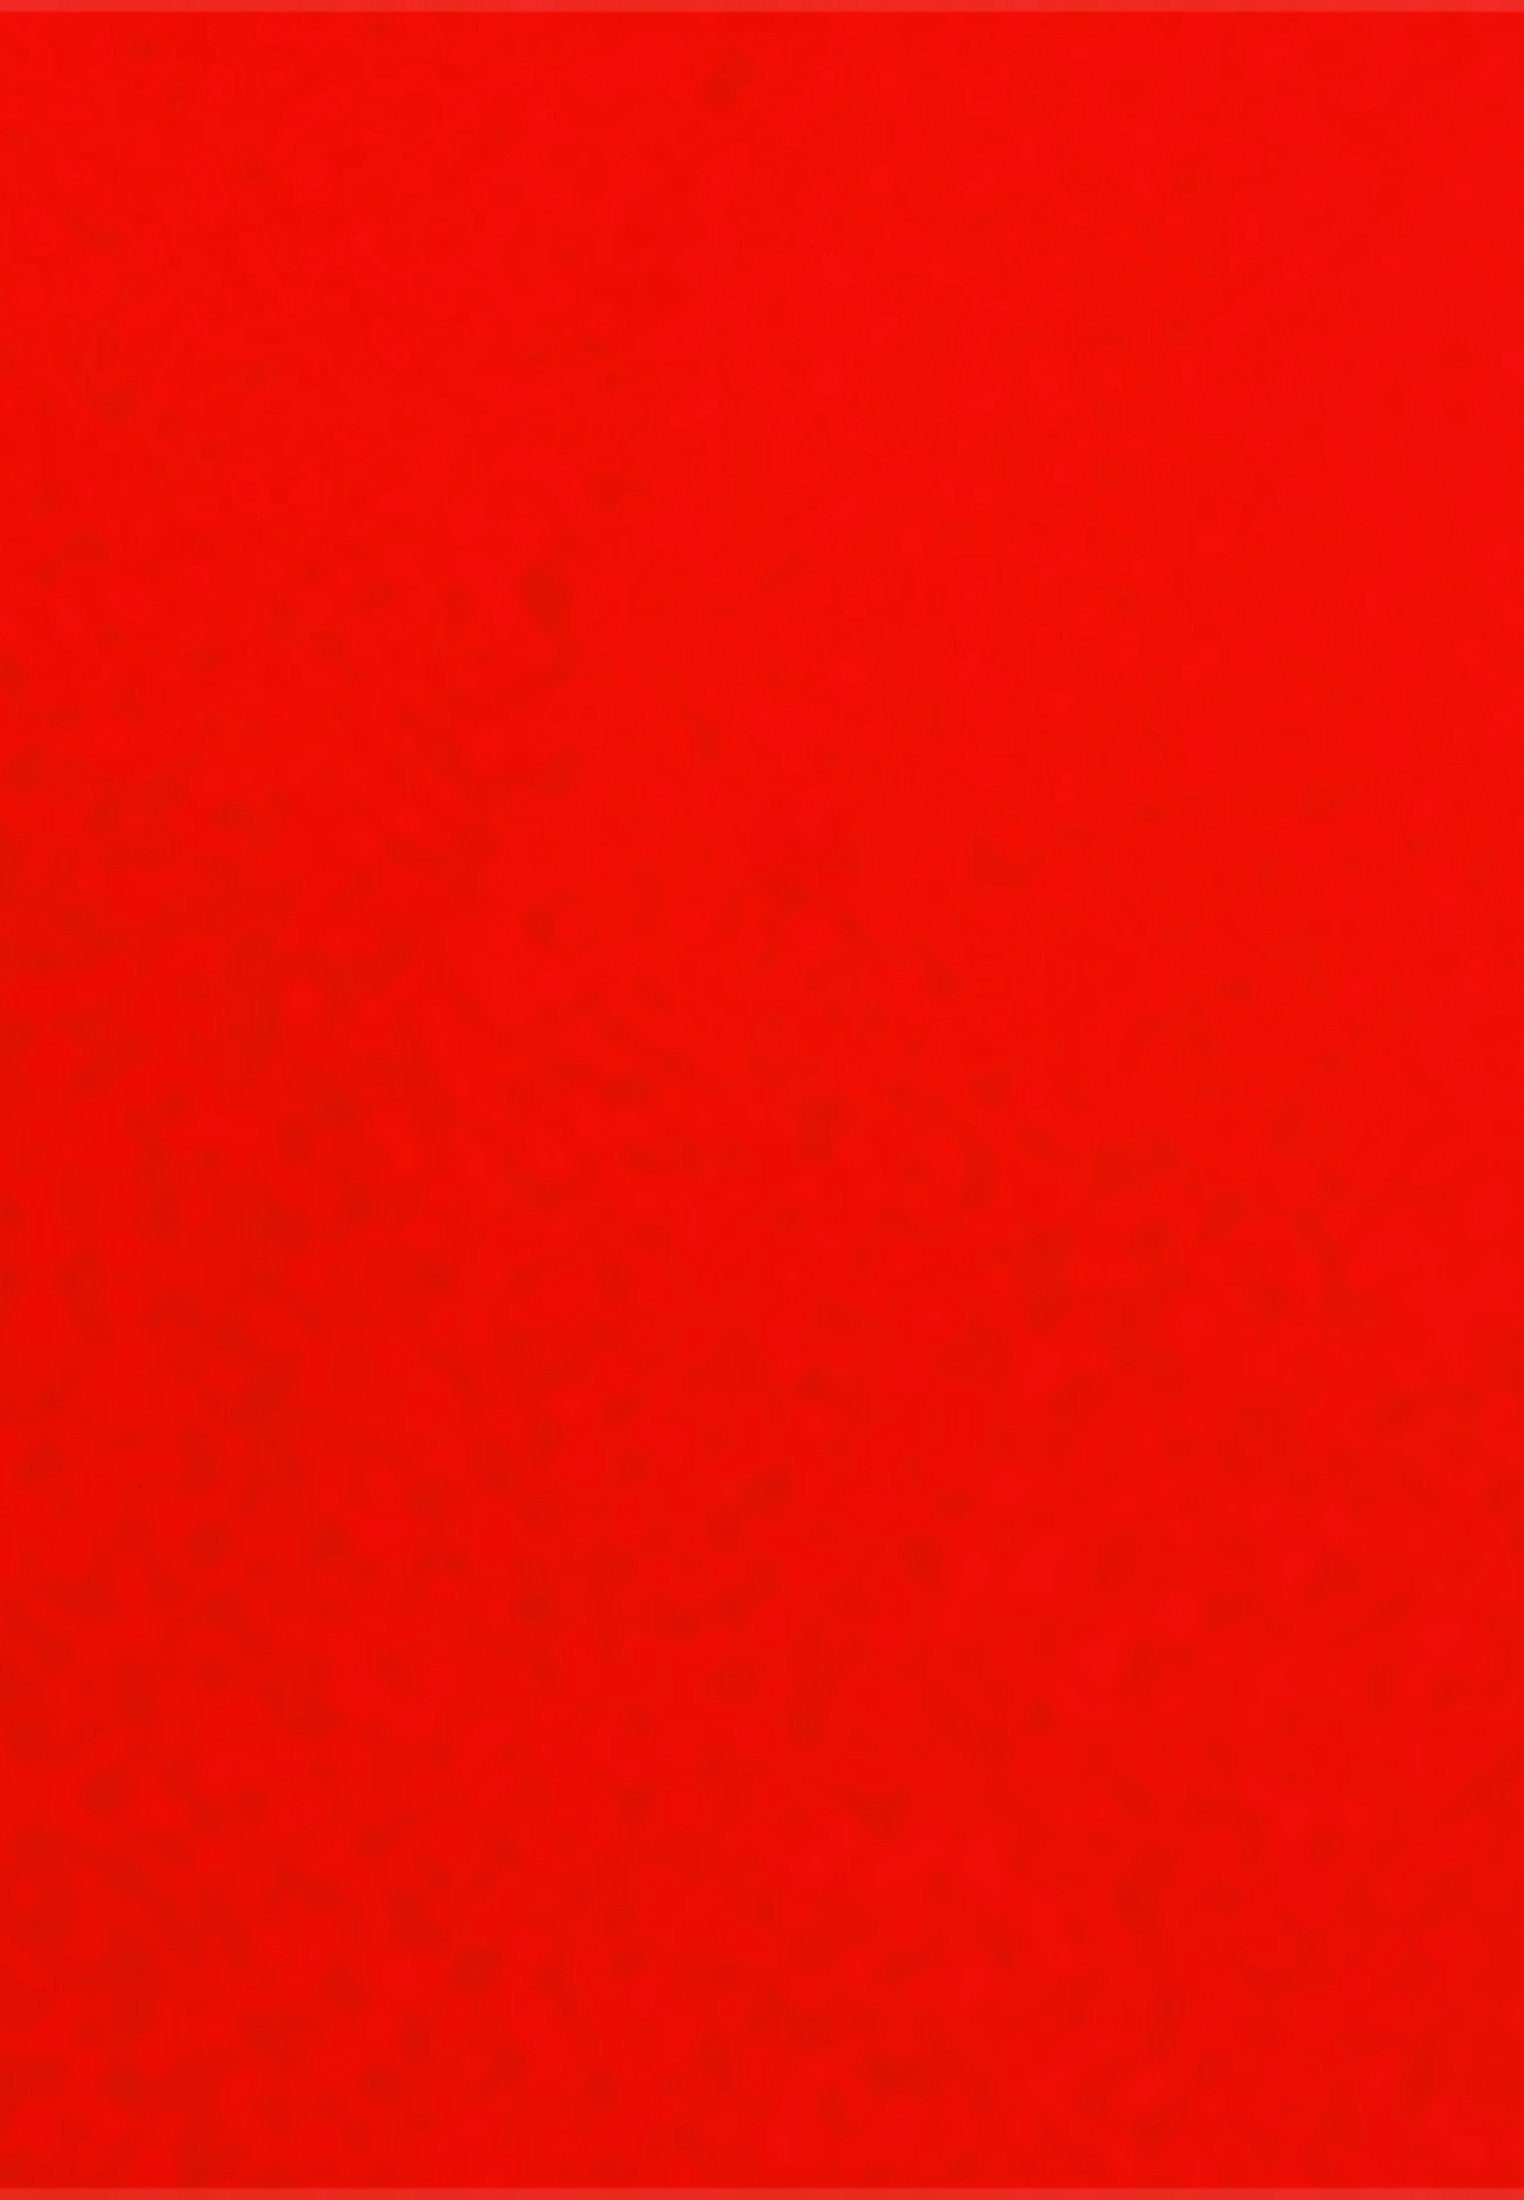 Uni Langarm Rot Kragen Rose Sommerkleid seidensticker Schwarze